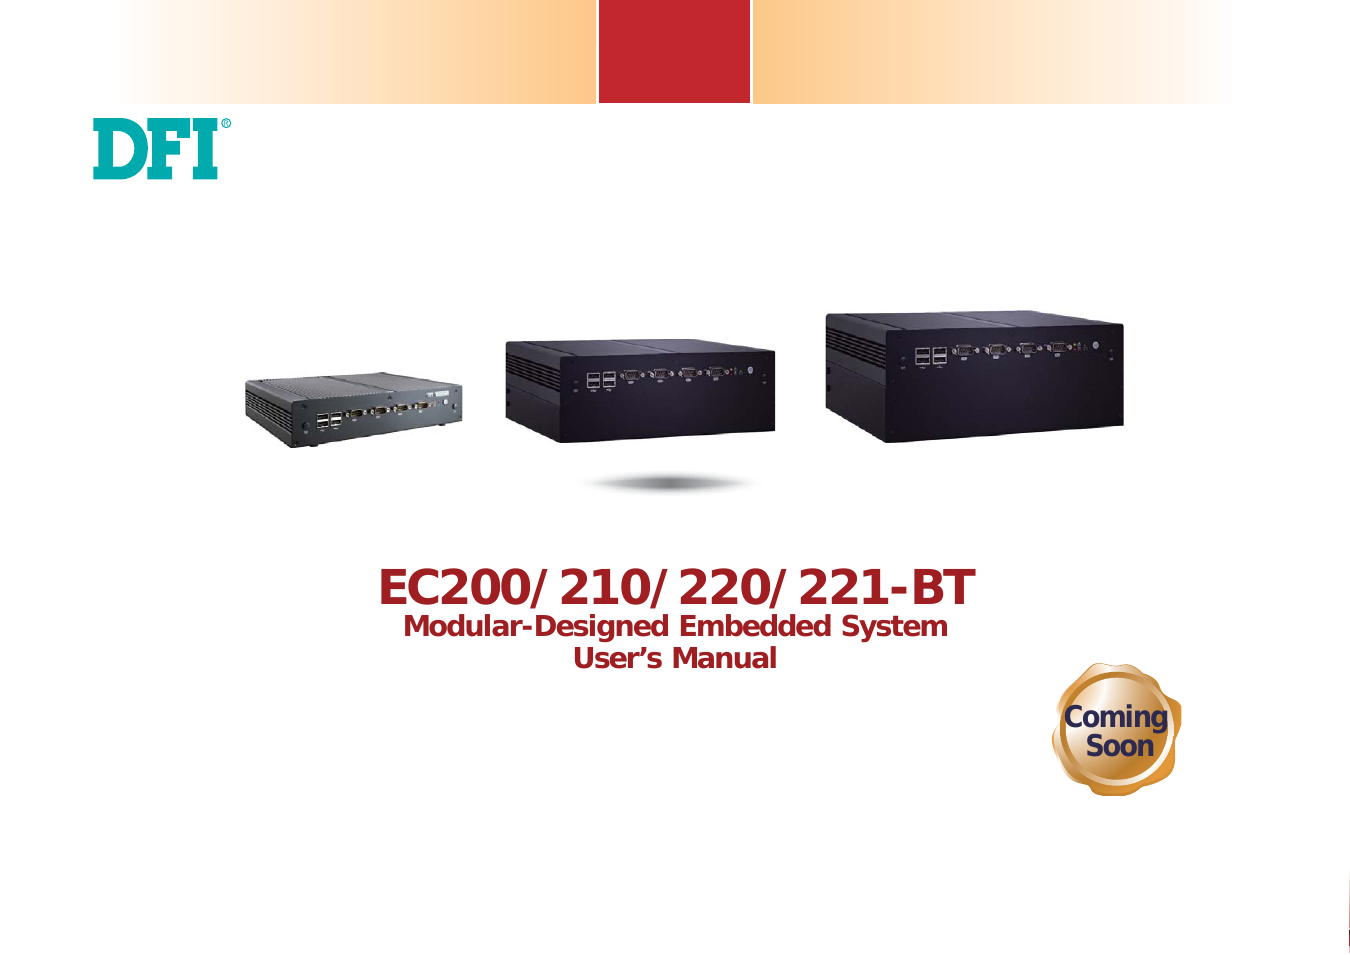 EC221-BT Series